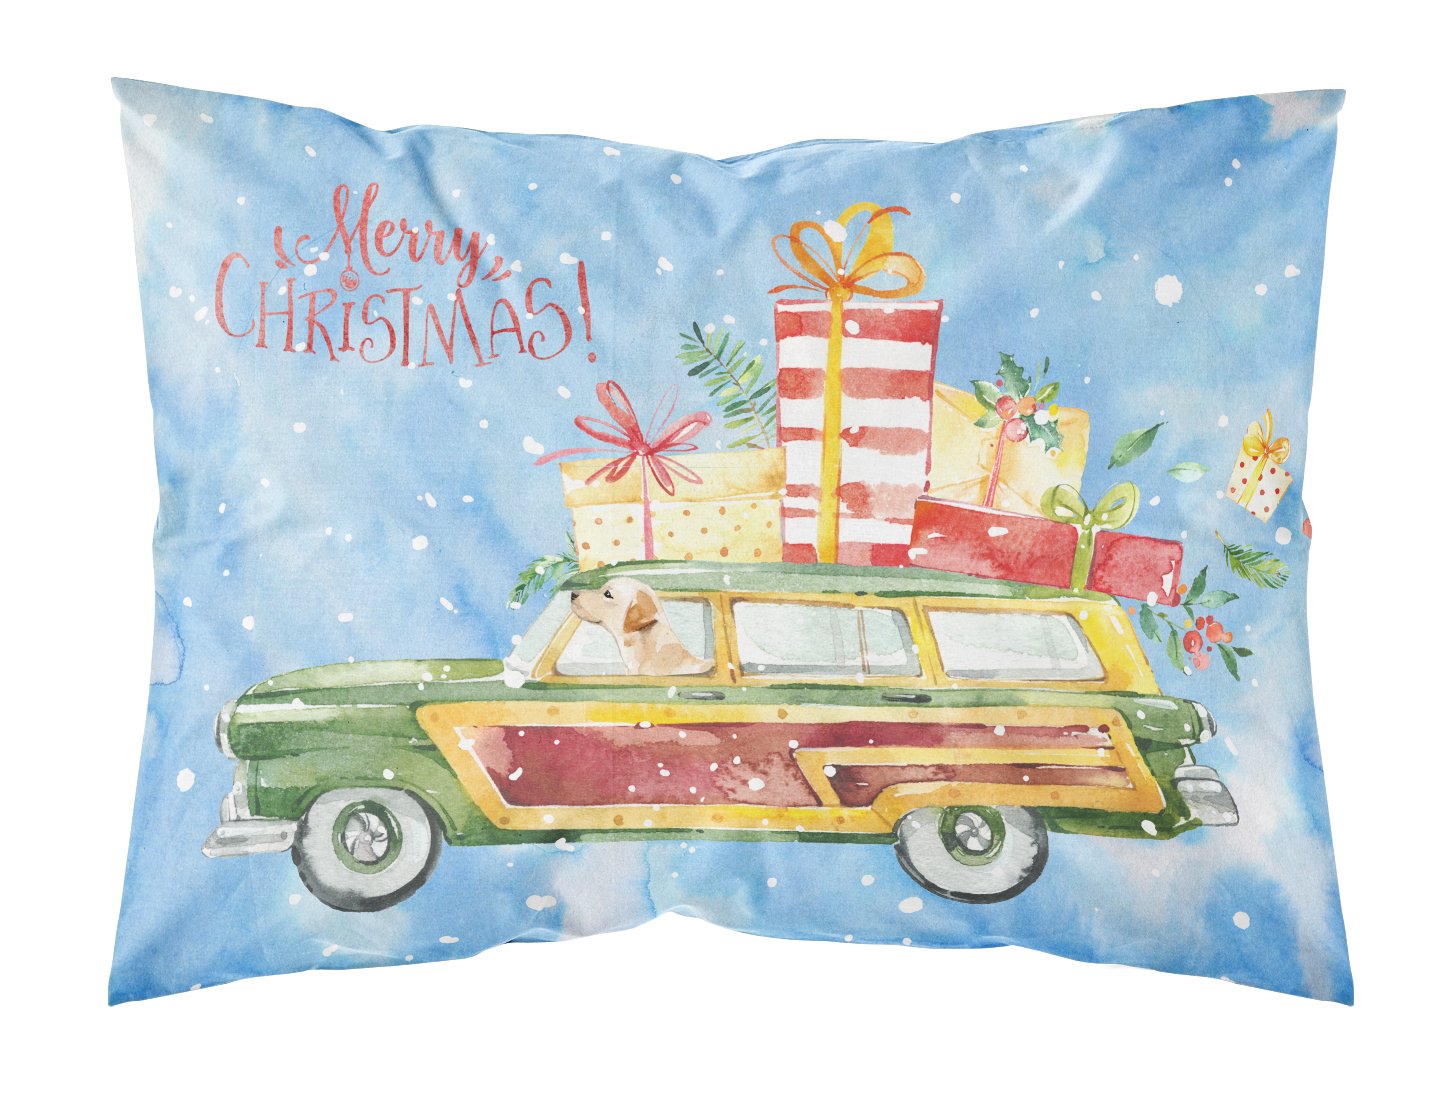 Merry Christmas Labrador Retriever Yellow Fabric Standard Pillowcase CK2459PILLOWCASE by Caroline's Treasures